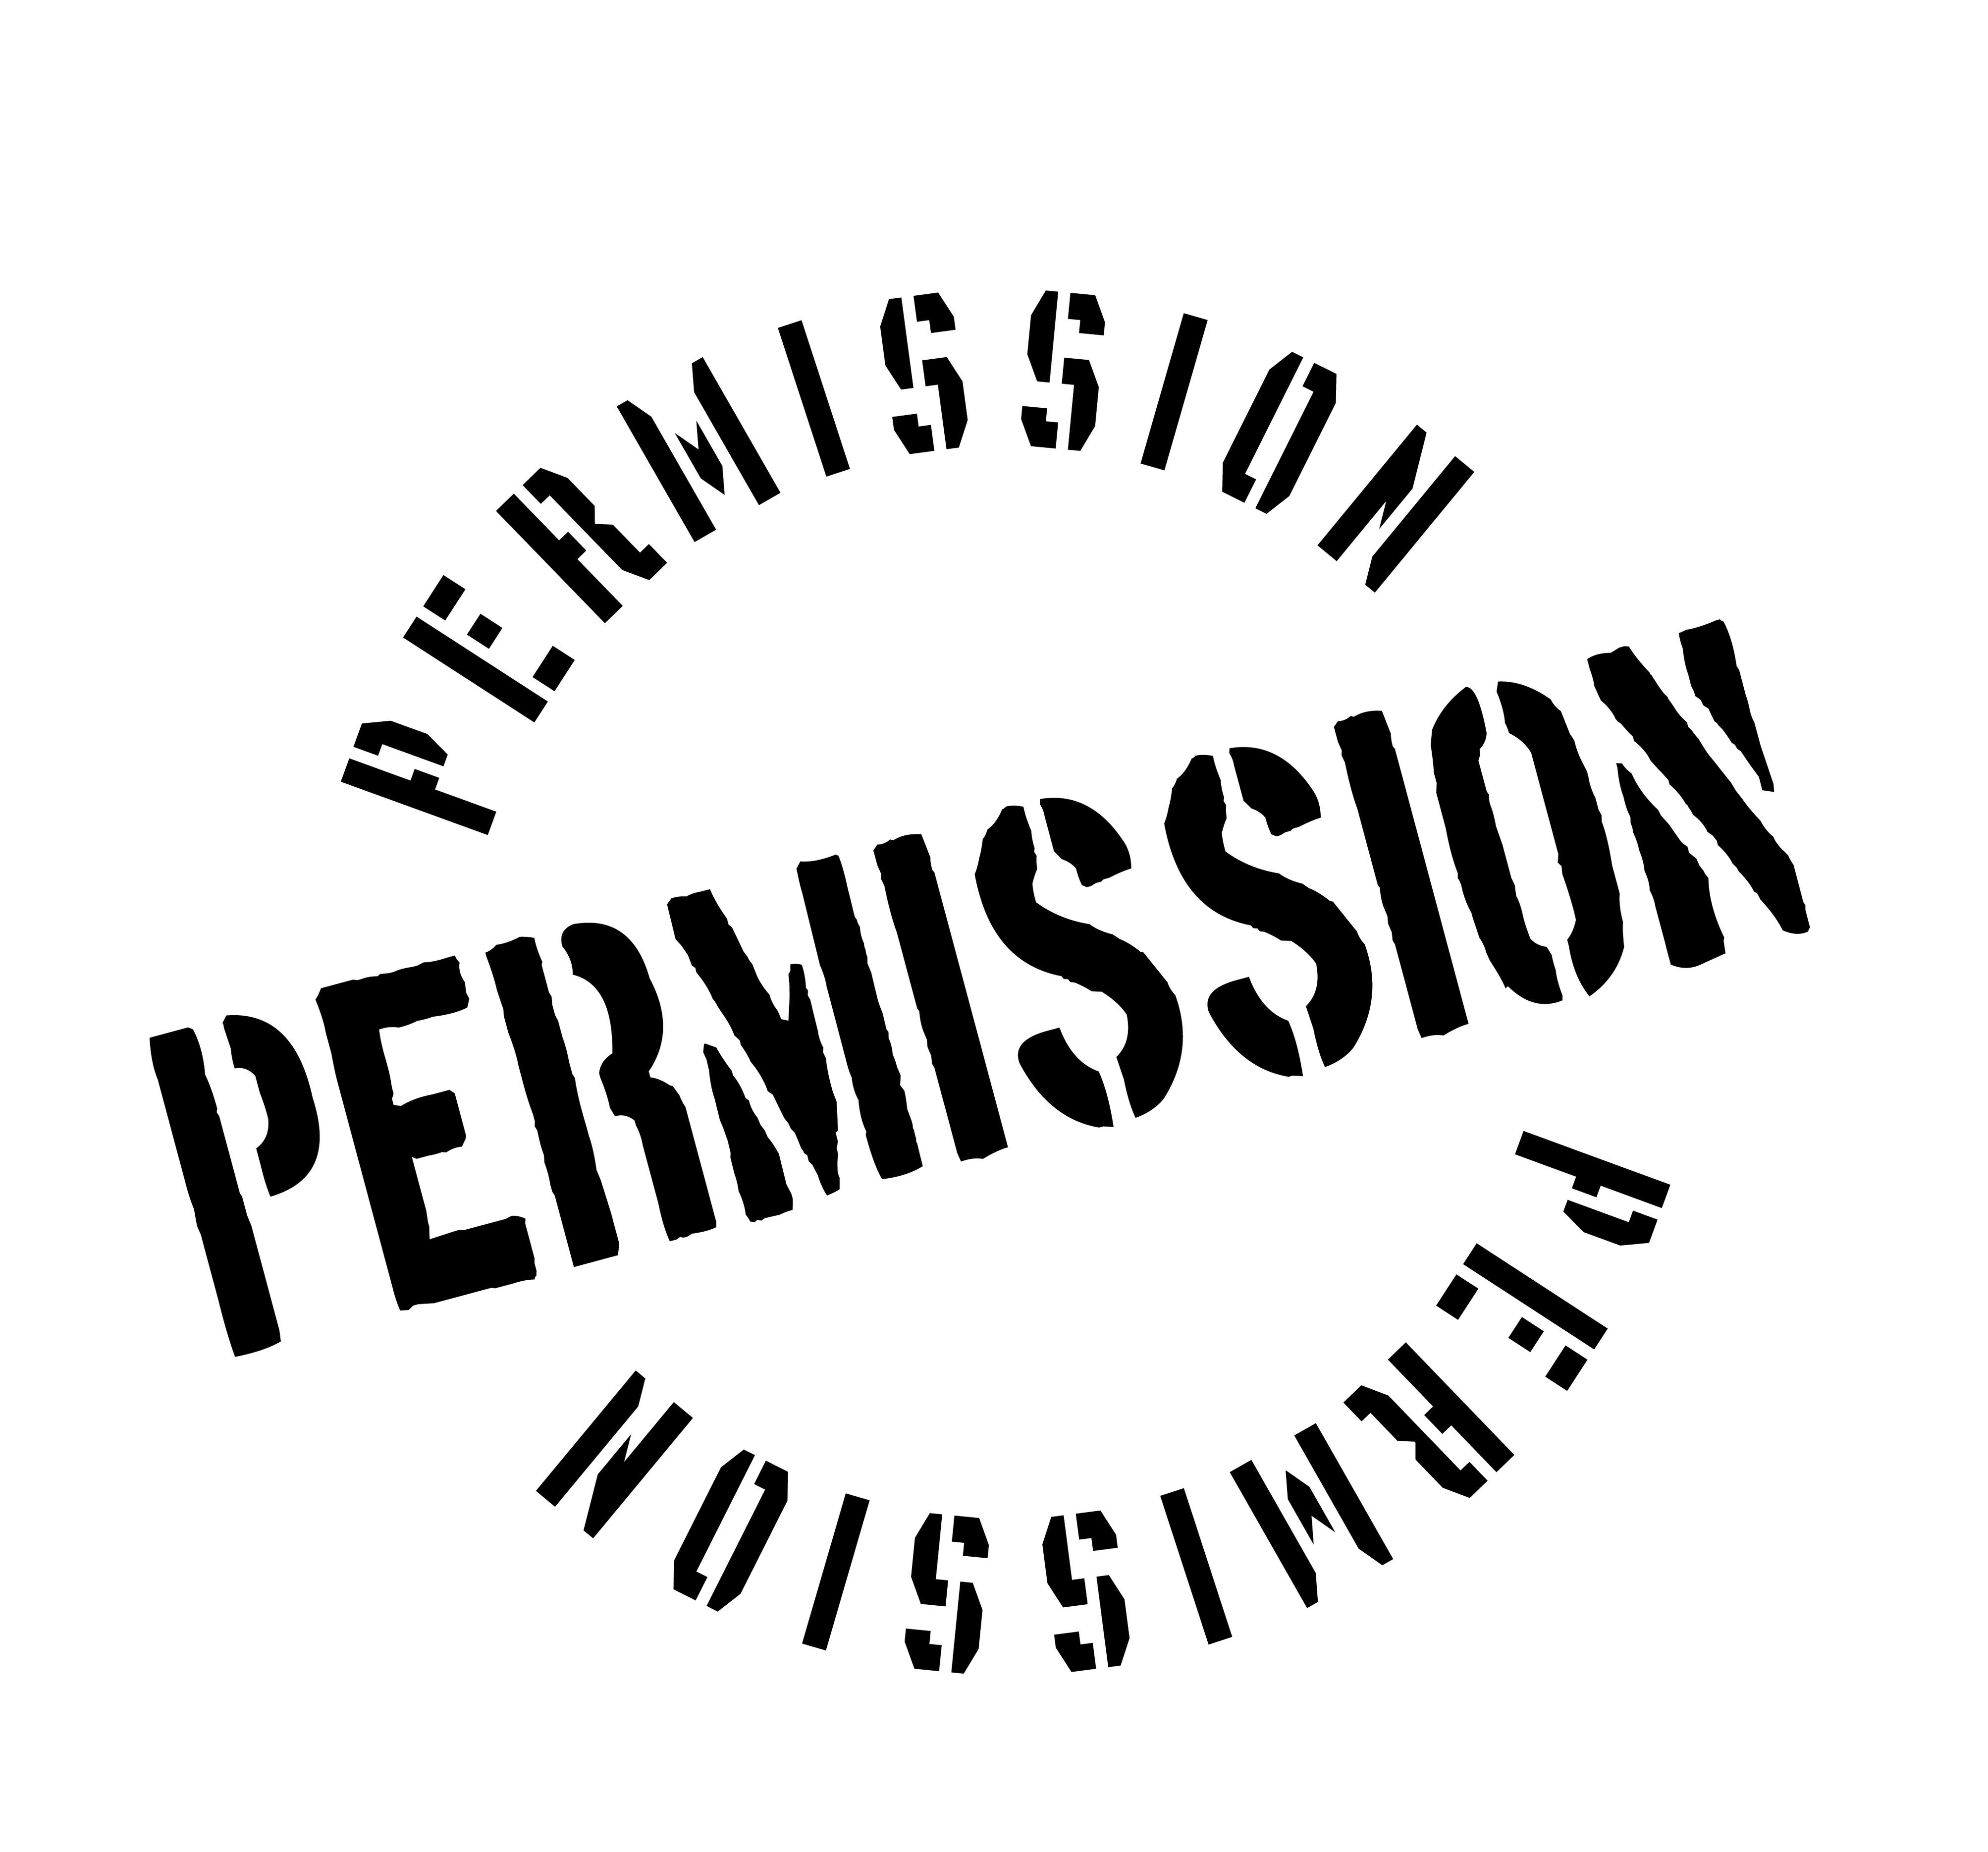 Child permission stamp